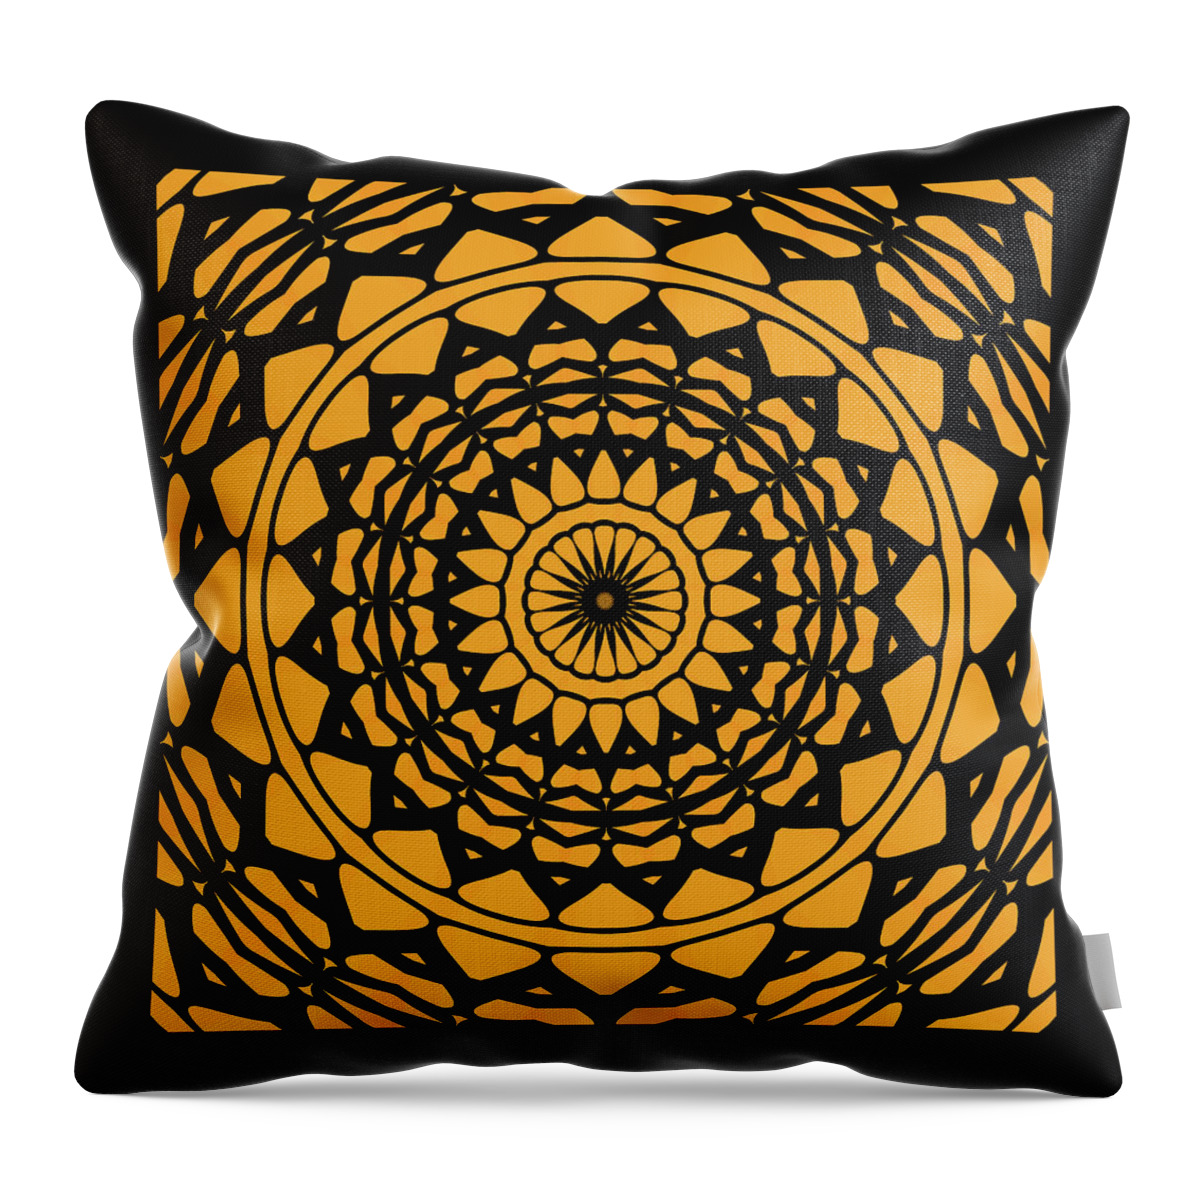 Kaleidoscope Throw Pillow featuring the digital art Digital Art 81 by Angie Tirado